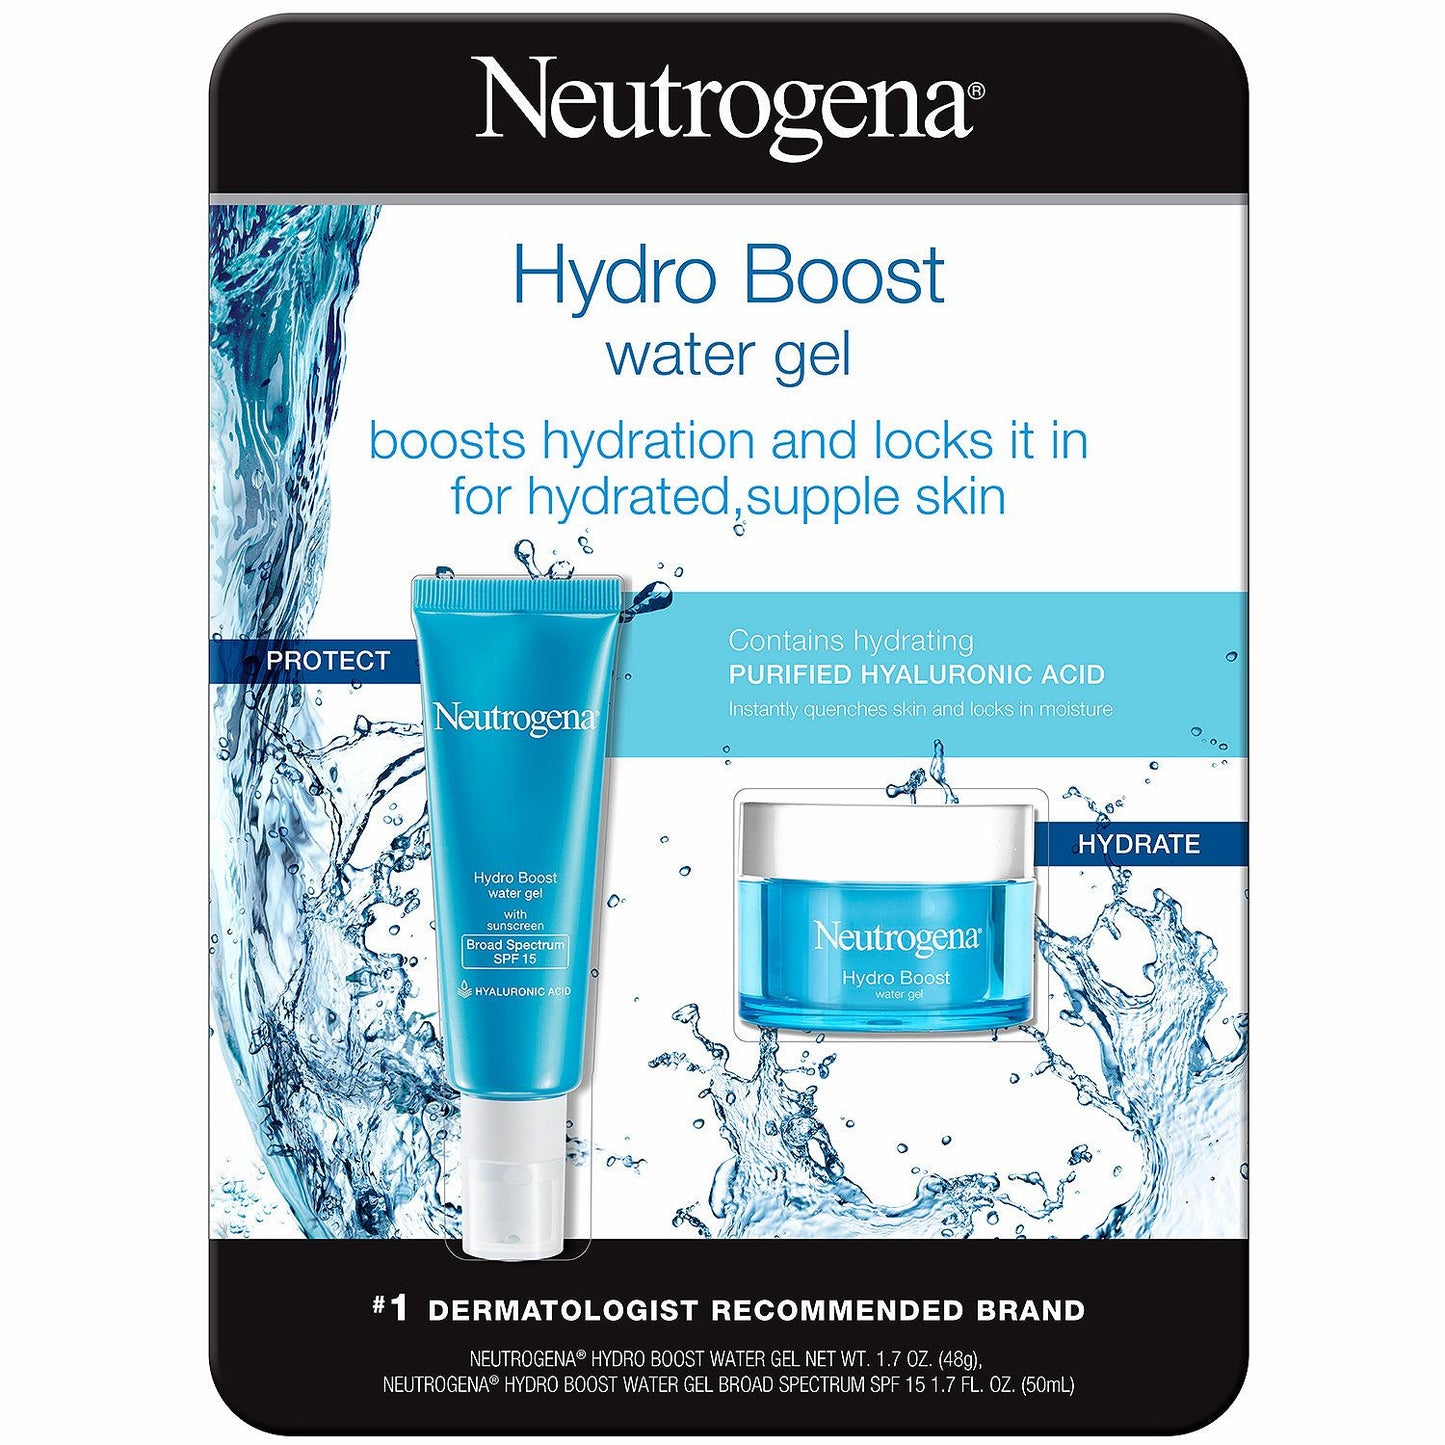 Neutrogena Hydro Boost Water Gel & Broad Spectrum Sunscreen SPF 15 (1.7 oz. + 1.7 fl. oz.)